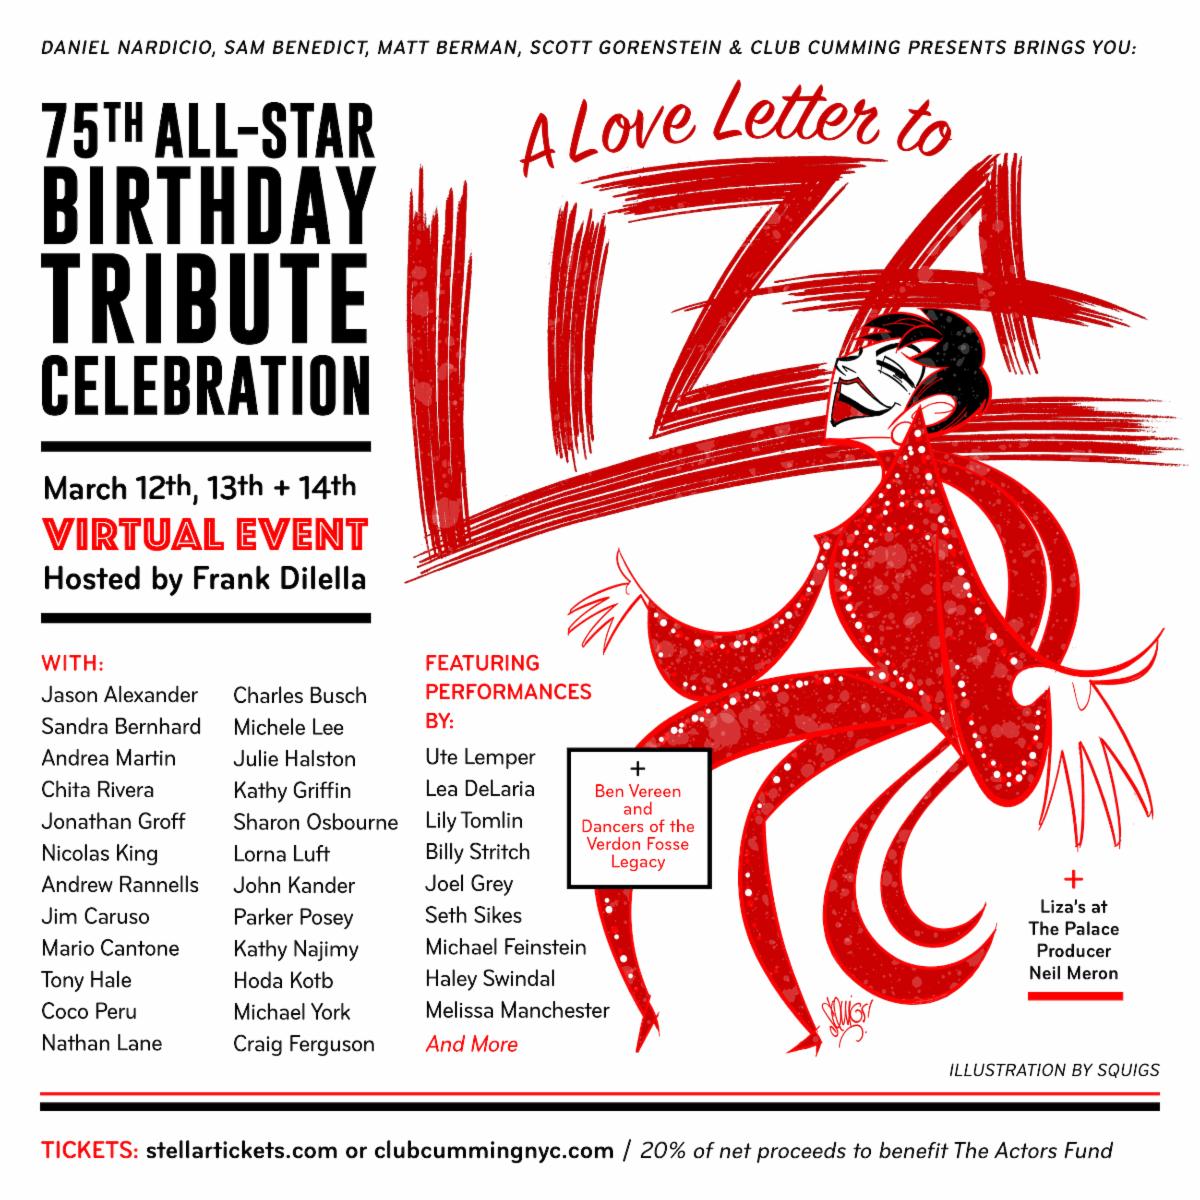 Celebrate Liza’s Birthday